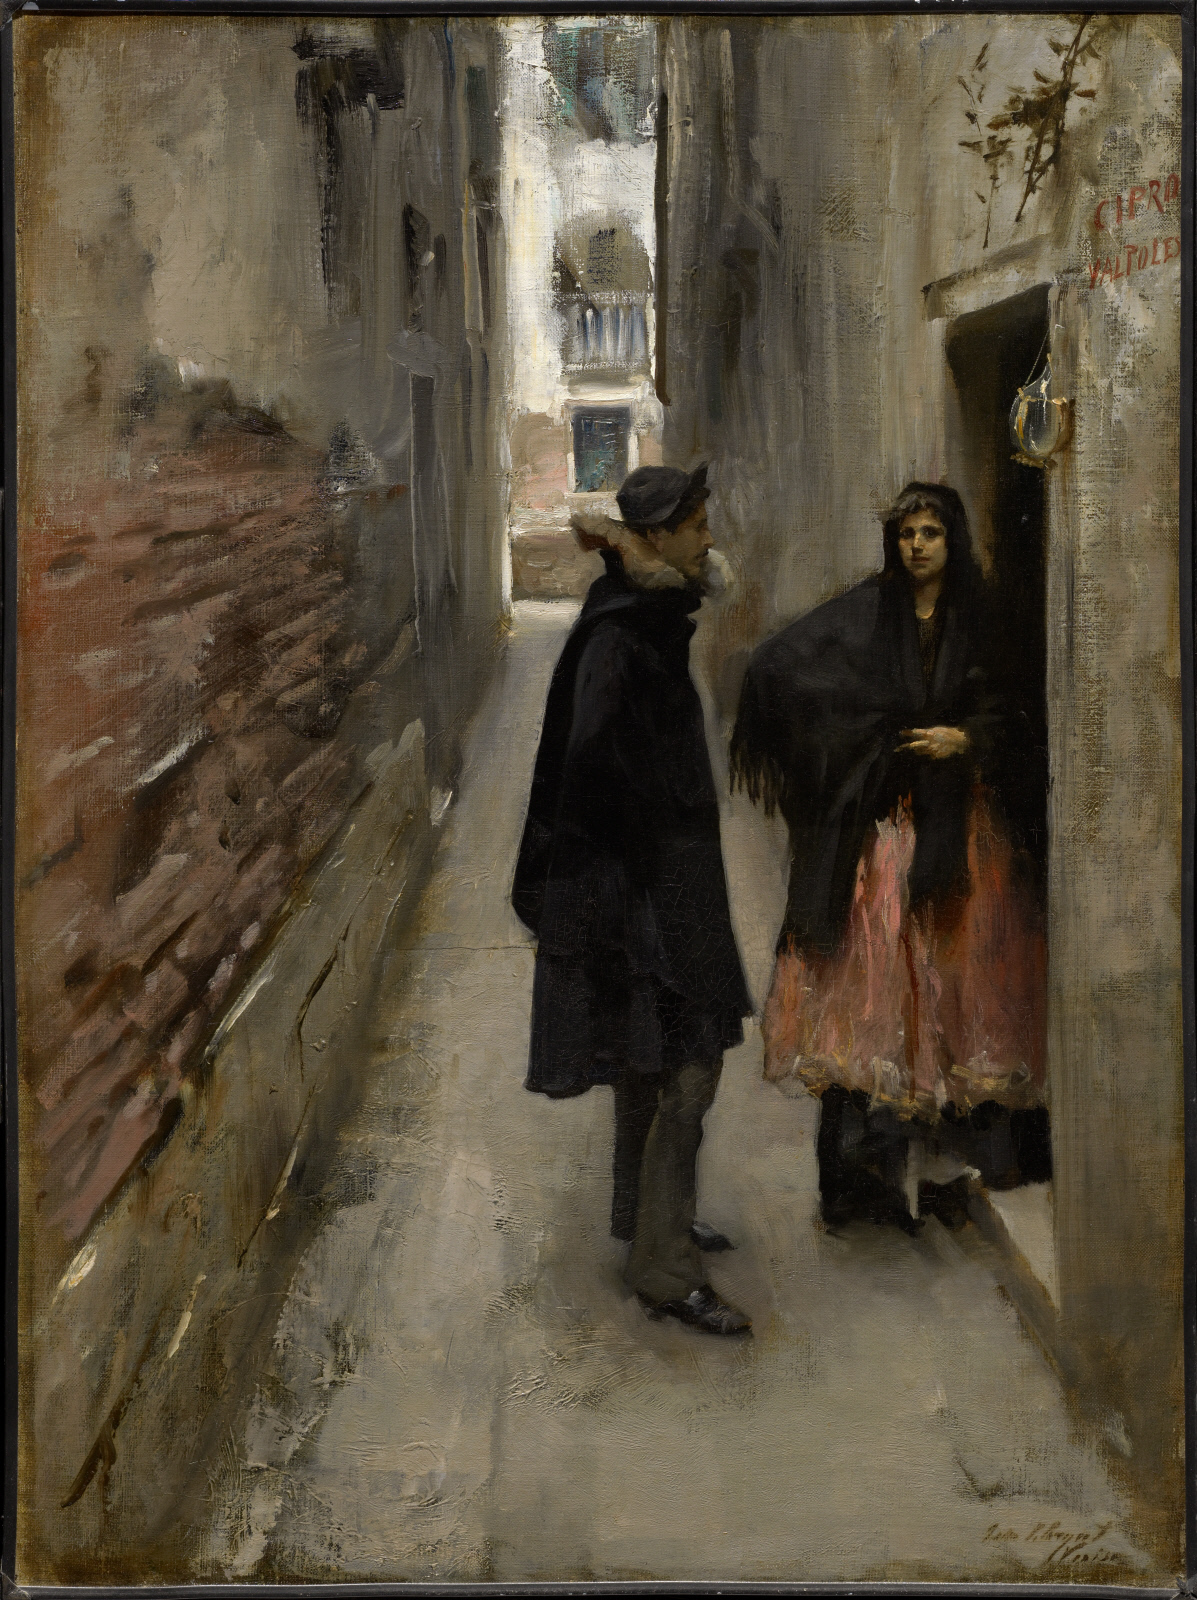 Street in Venice by John Singer Sargent - c. 1880–82 - 75.1 x 52.4 cm The Clark